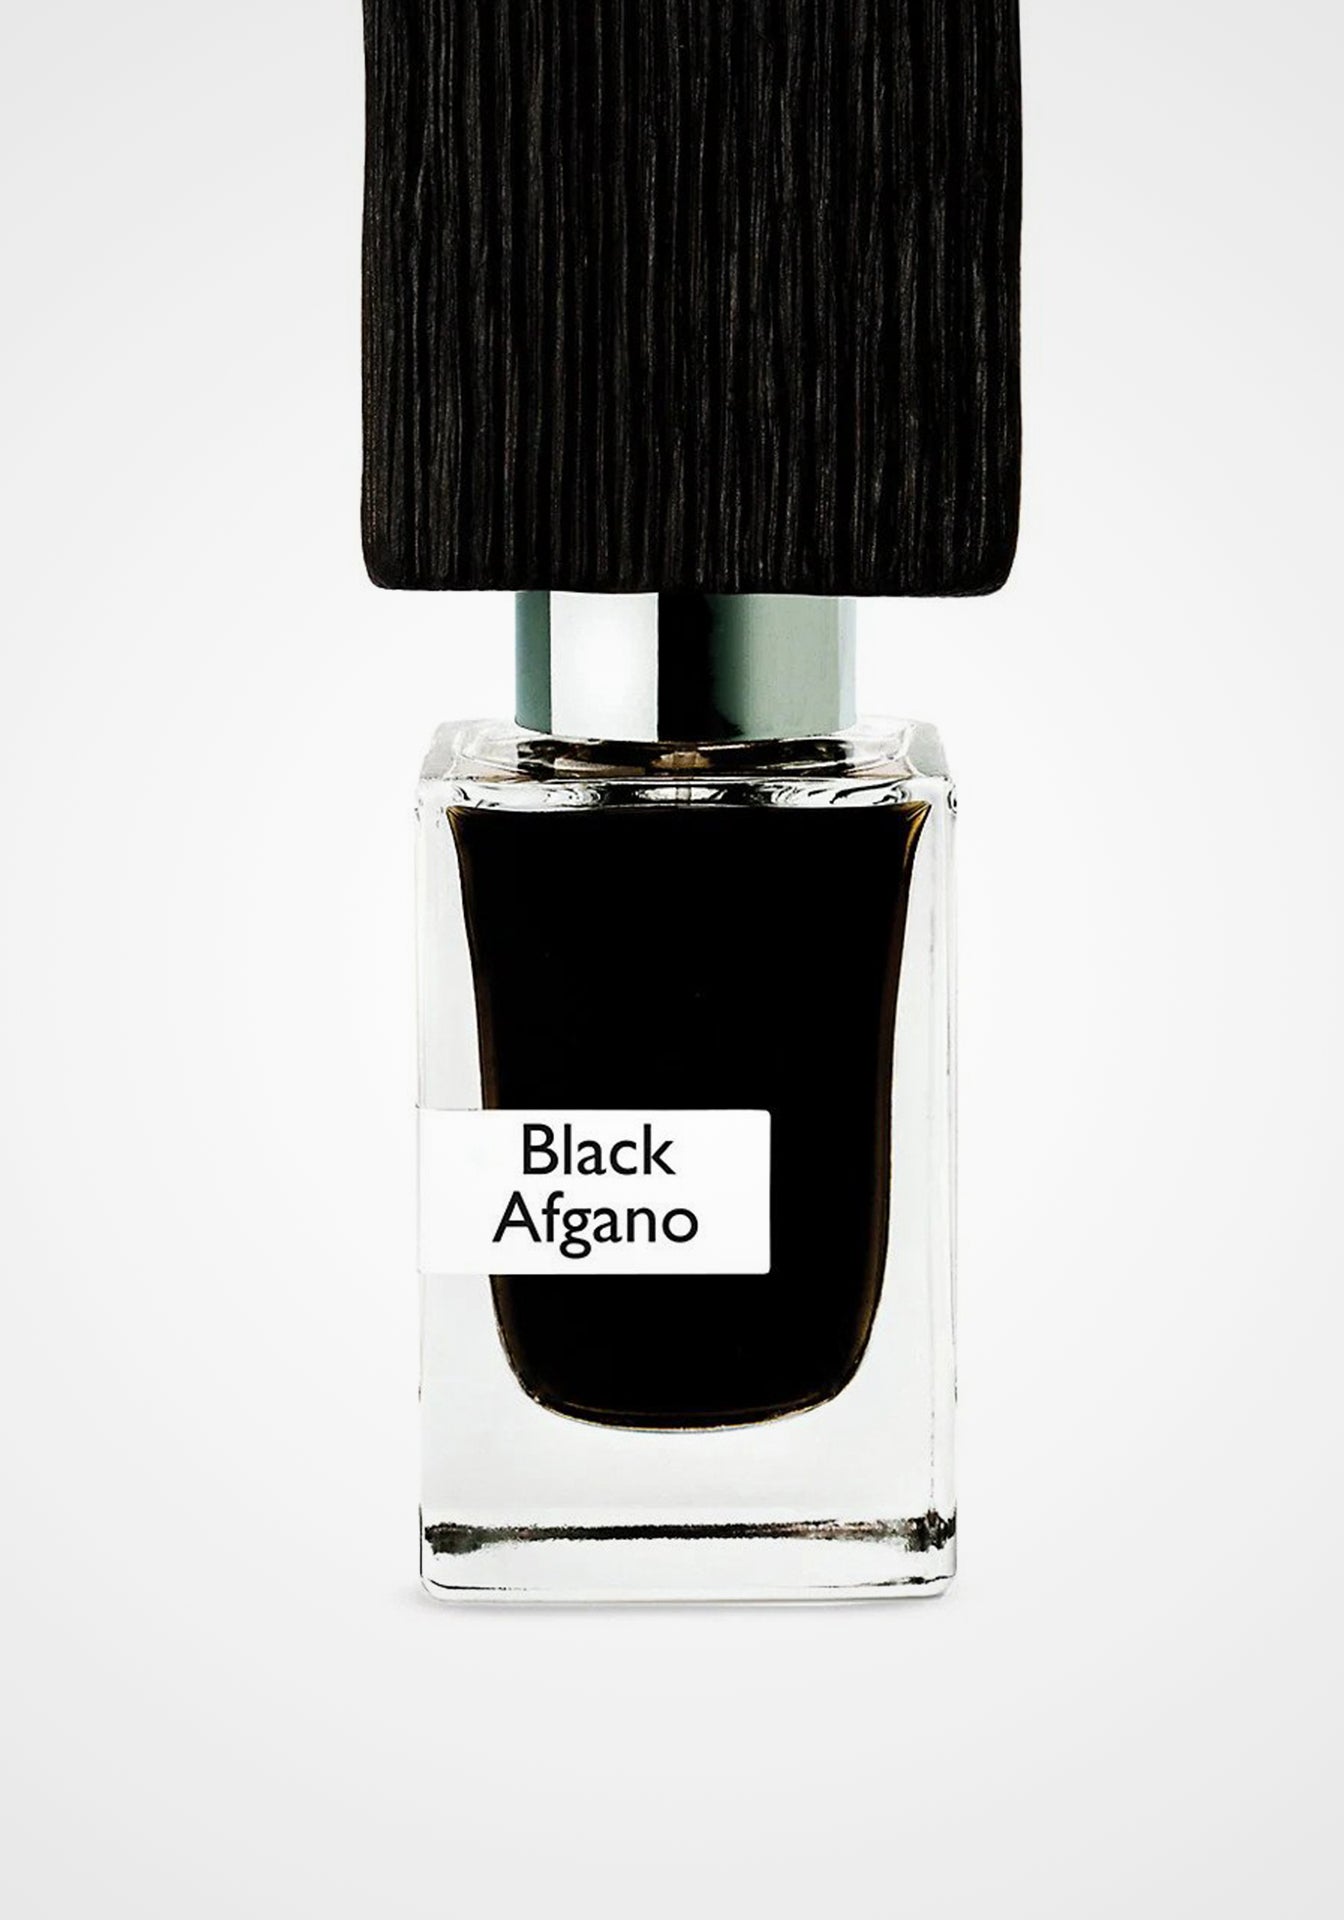 Black Afgano Extrait de Parfum – The Conservatory NYC